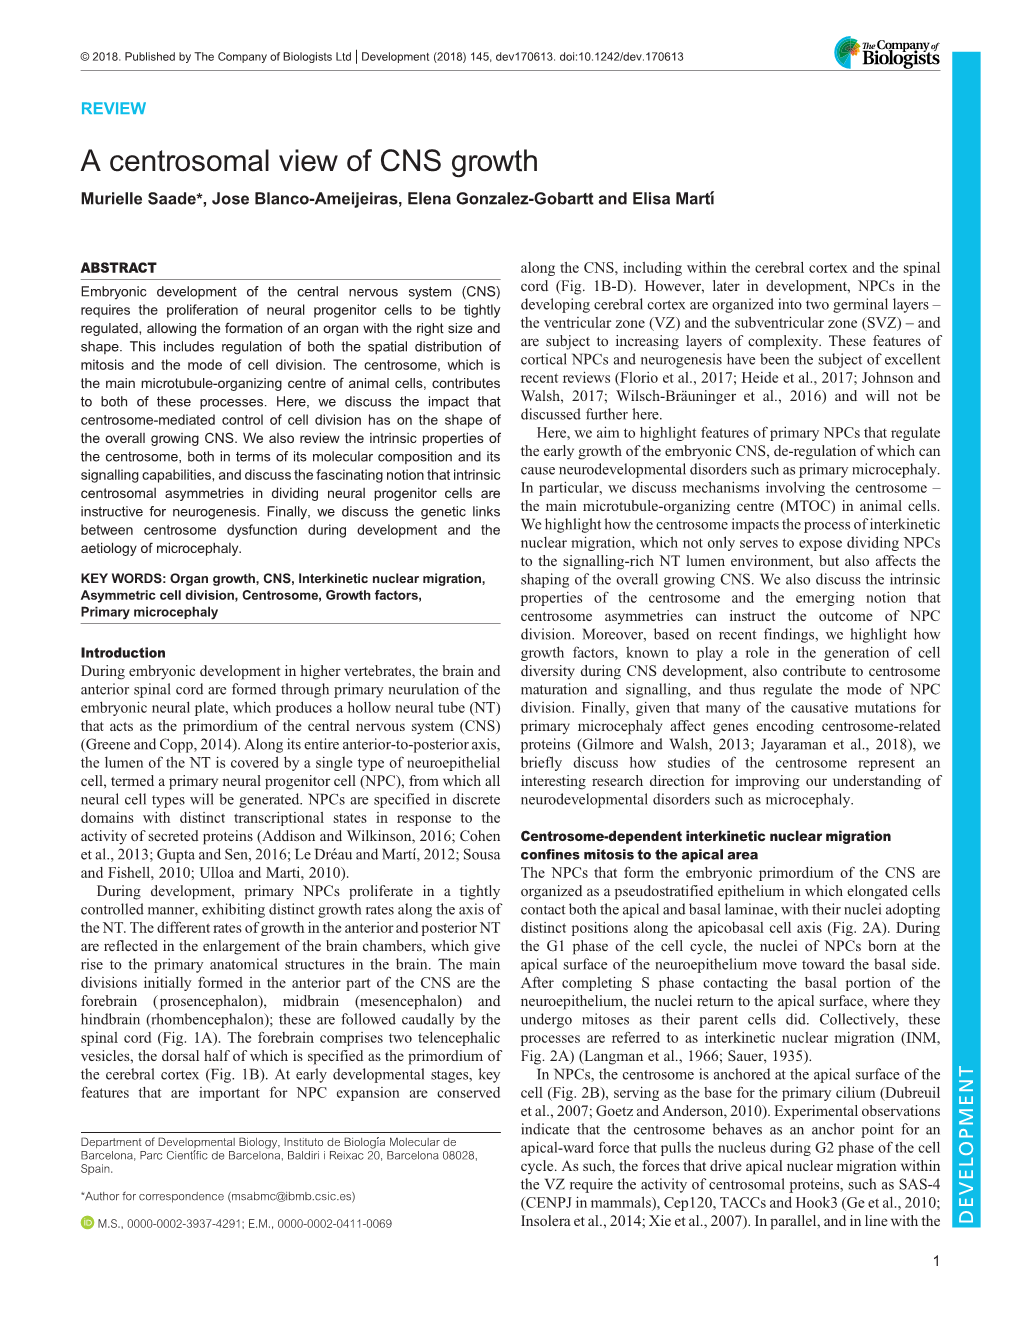 A Centrosomal View of CNS Growth Murielle Saade*, Jose Blanco-Ameijeiras, Elena Gonzalez-Gobartt and Elisa Martı́